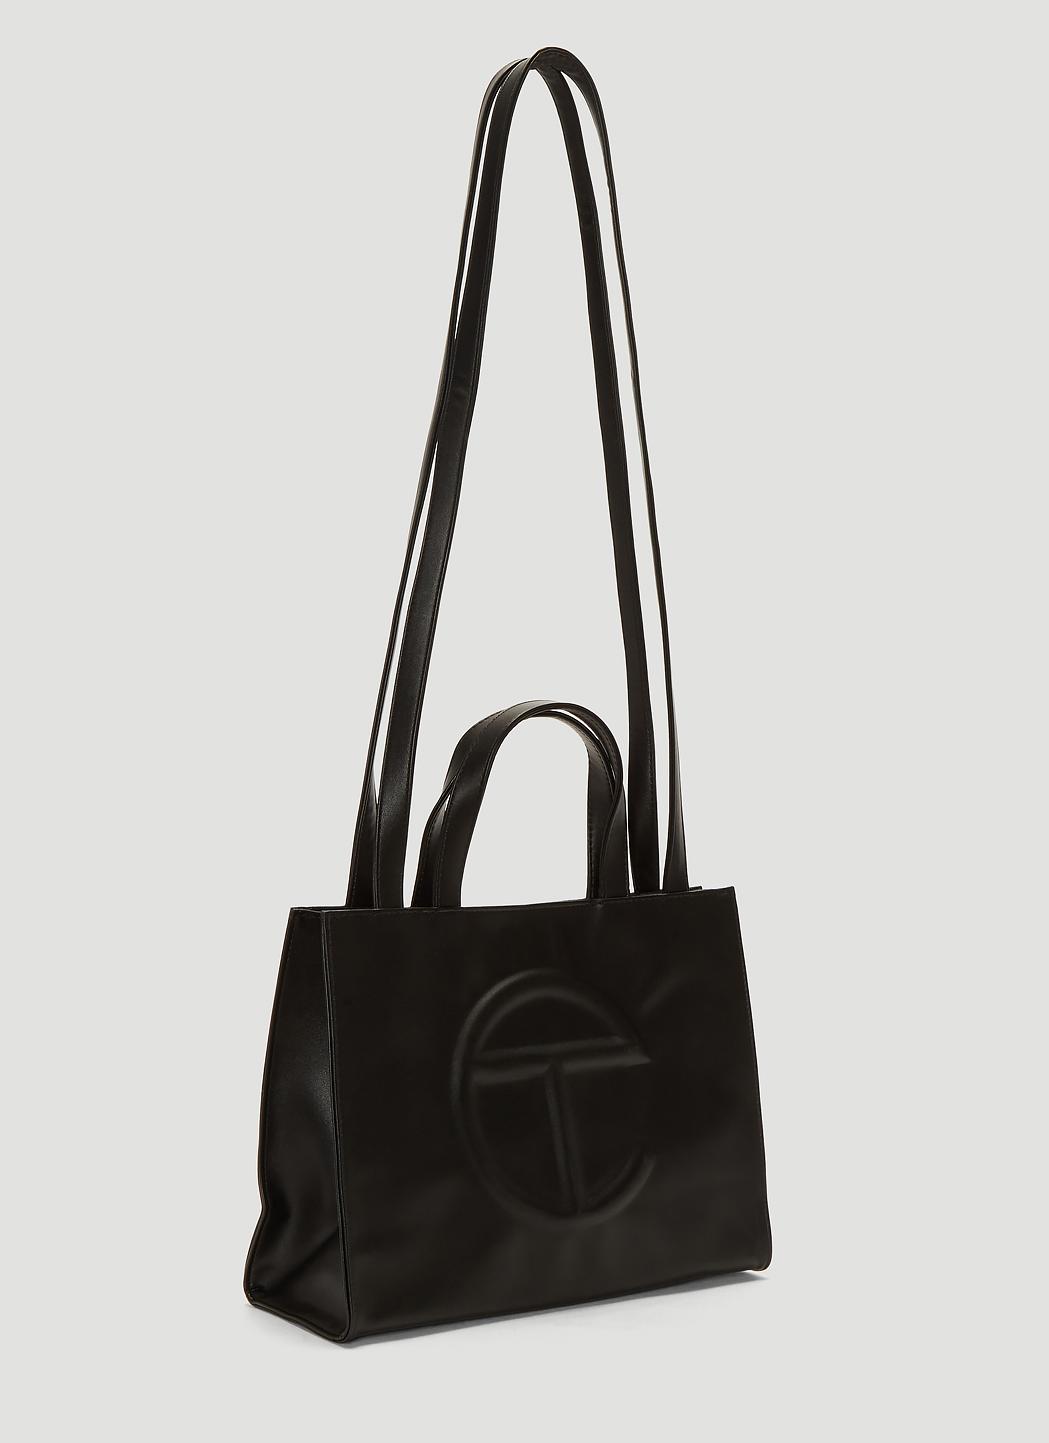 UnBoxing TELFAR Small Tan & Medium Black Shopping Bag